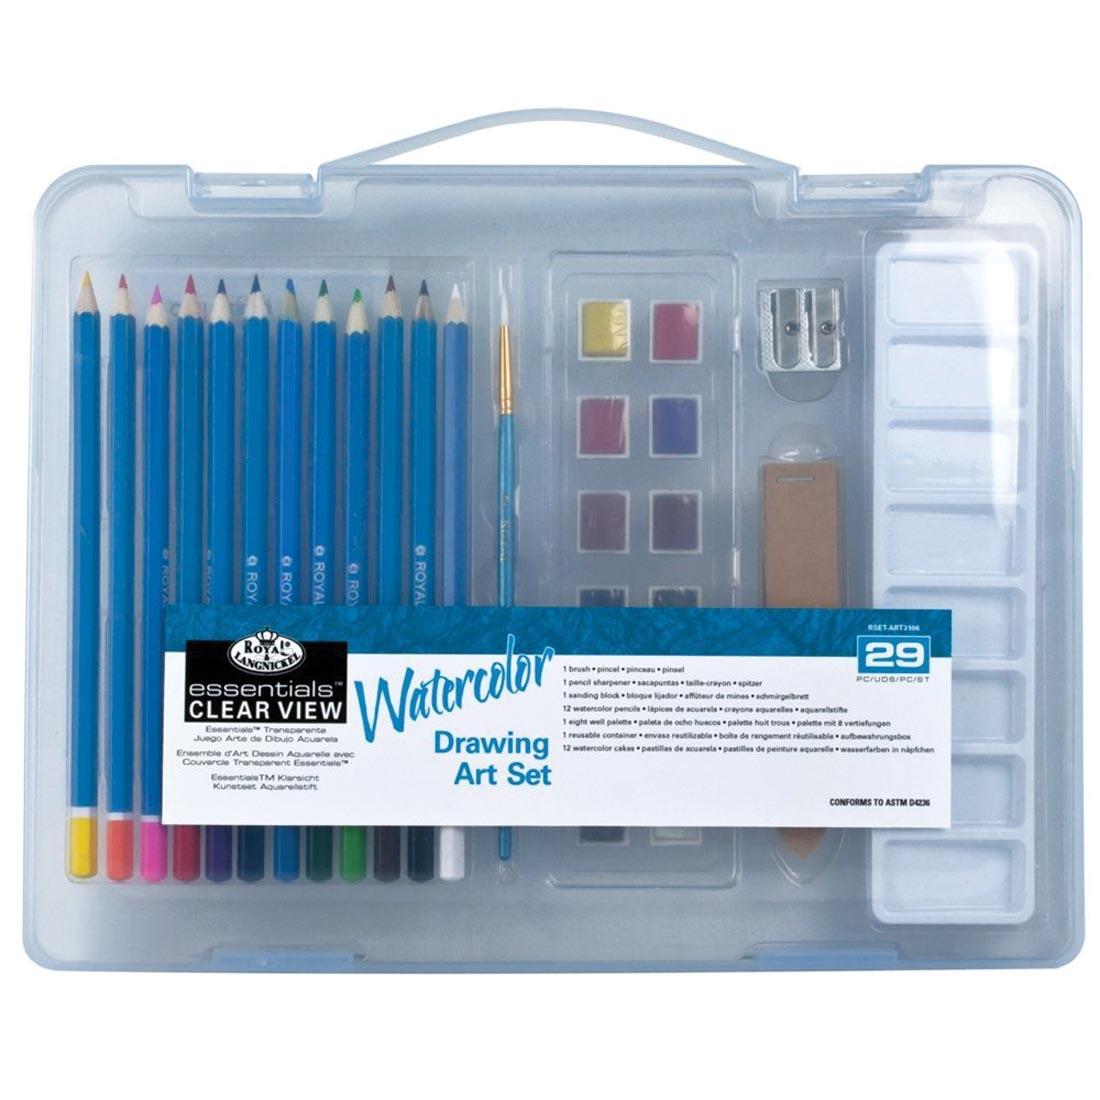 Royal & Langnickel Essentials Clear View Watercolor Drawing Art Set